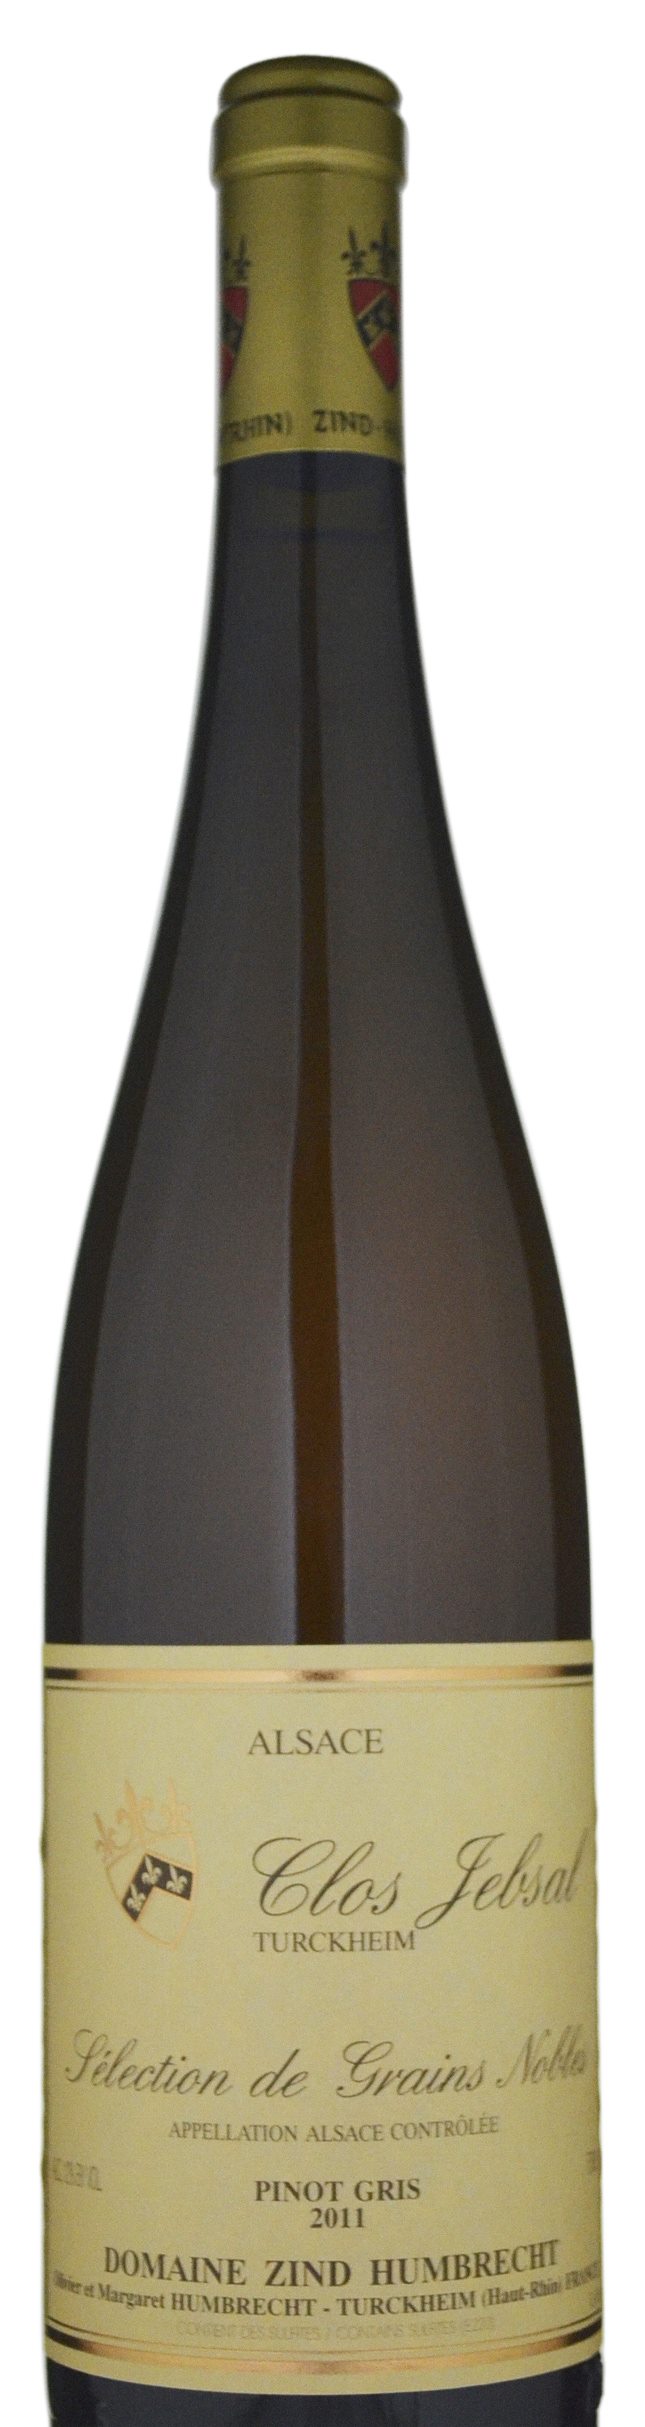 Domaine Zind Humbrecht Clos Jebsal Selection De Grains Noble Tokay Pinot Gris 2011